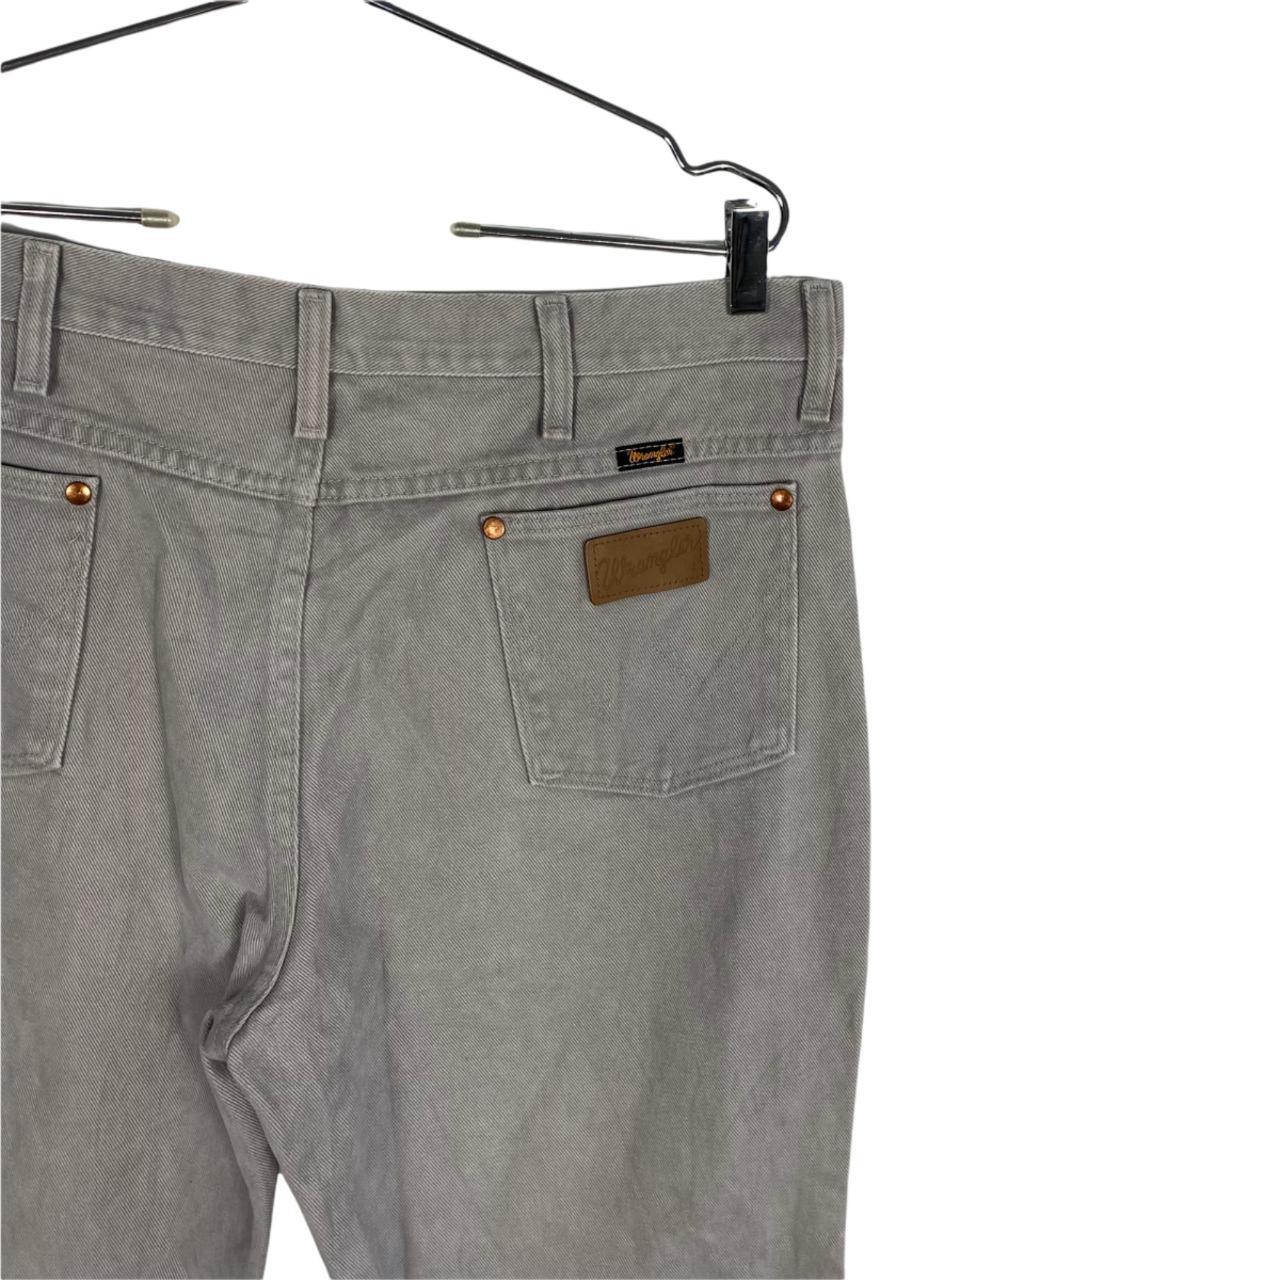 Wrangler Grey Denim Casual Pants Mens Size 36x30... - Depop